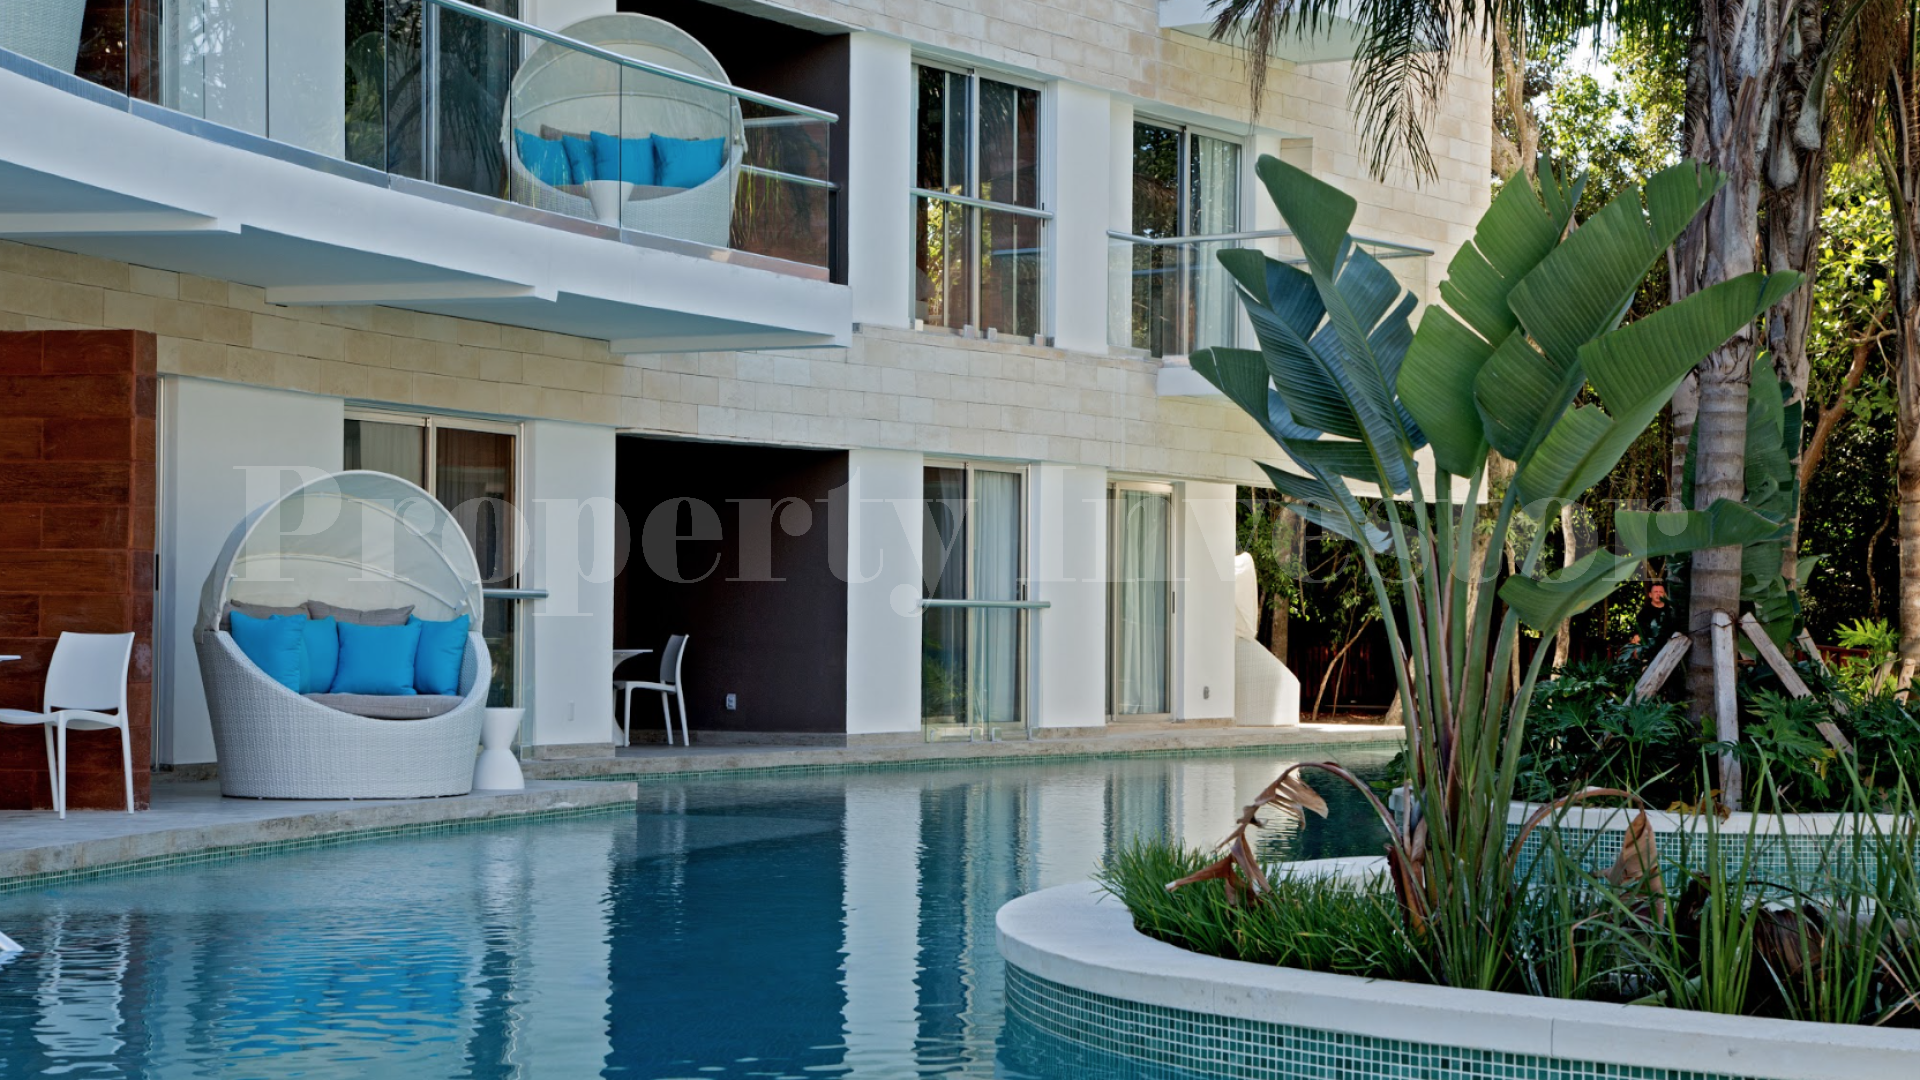 Exclusive 1 Bedroom Boutique Resort Apartment in Playa del Carmen (Unit 2122)